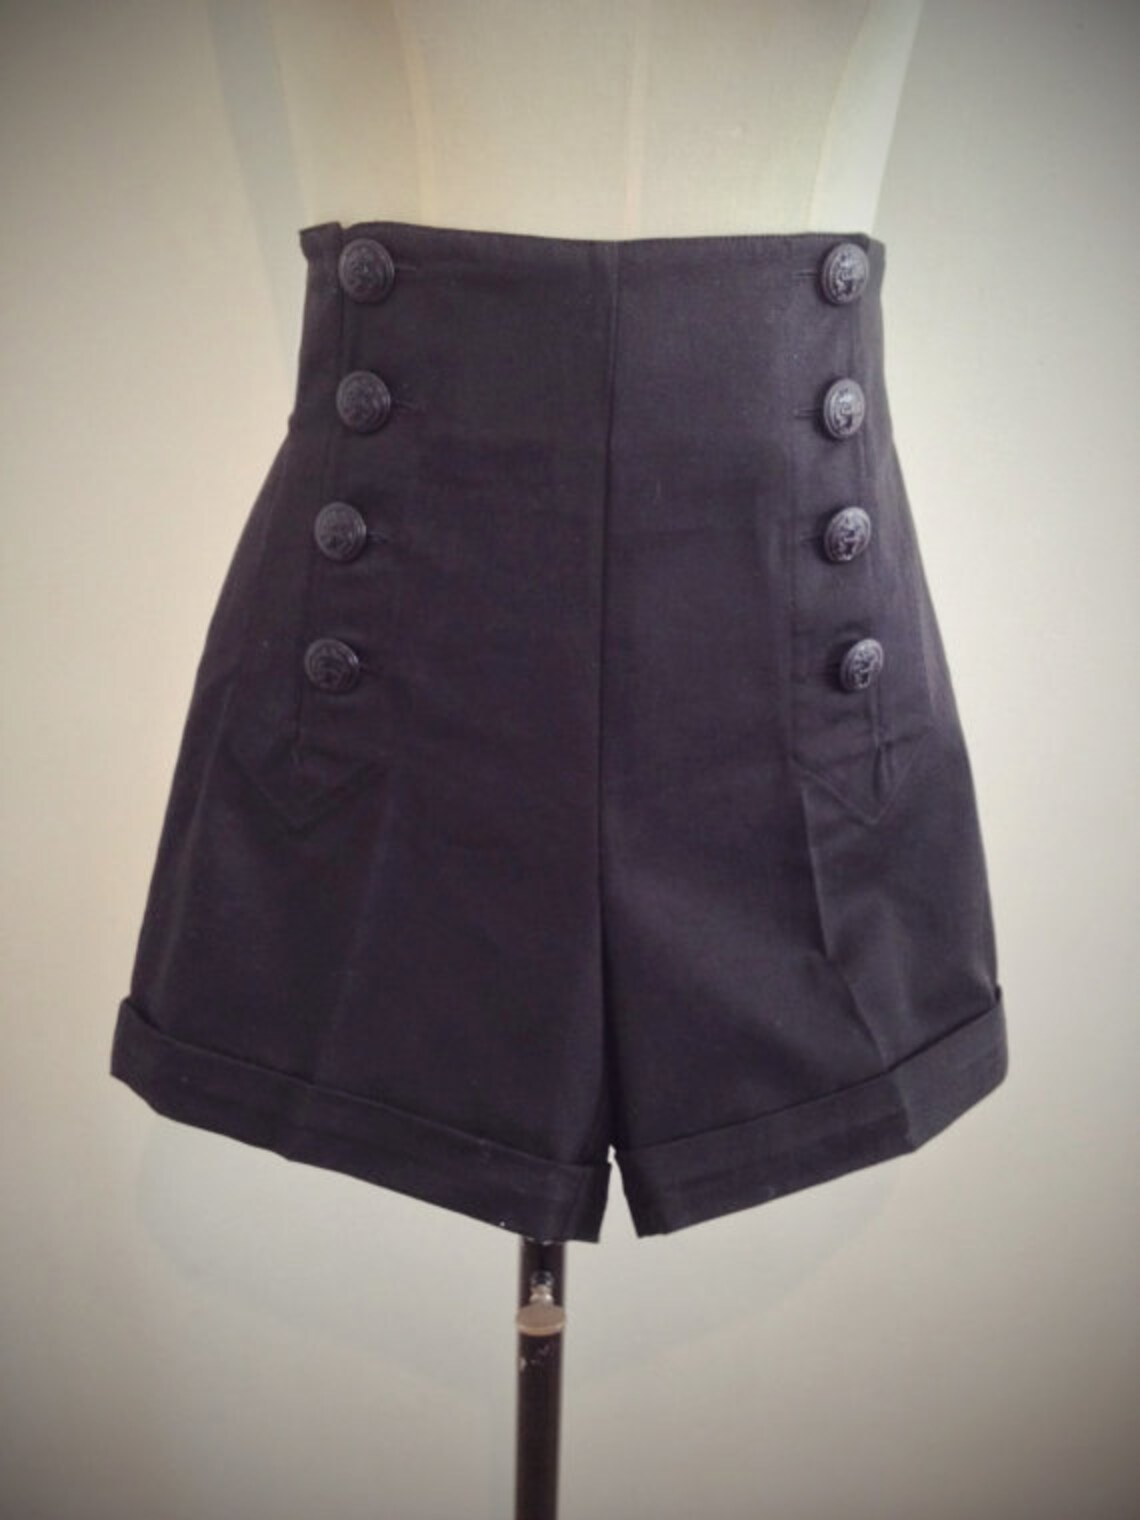 BLACK SAILOR SHORTS high waist 1940's style swing pants. | Etsy